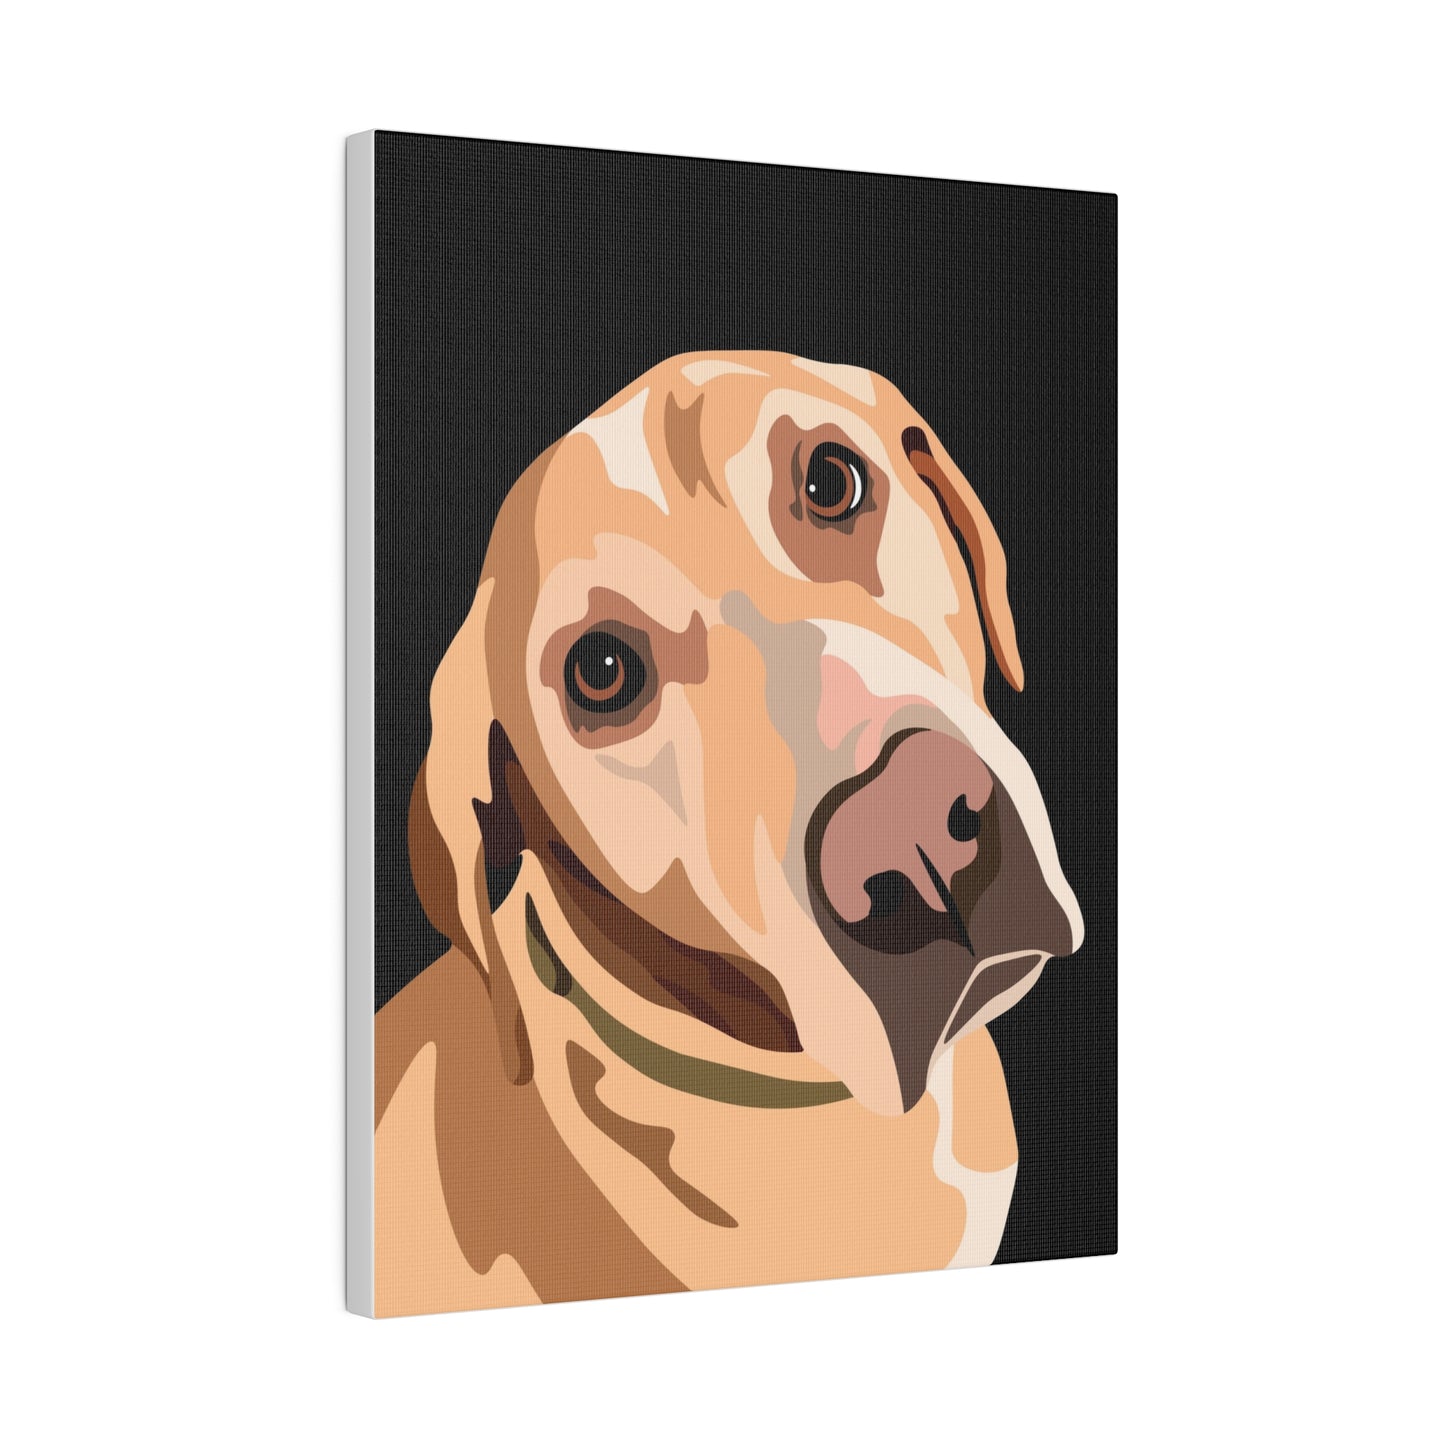 One Pet Portrait on Canvas | Black Background | Custom Hand-Drawn Pet Portrait in Cartoon-Realism Style